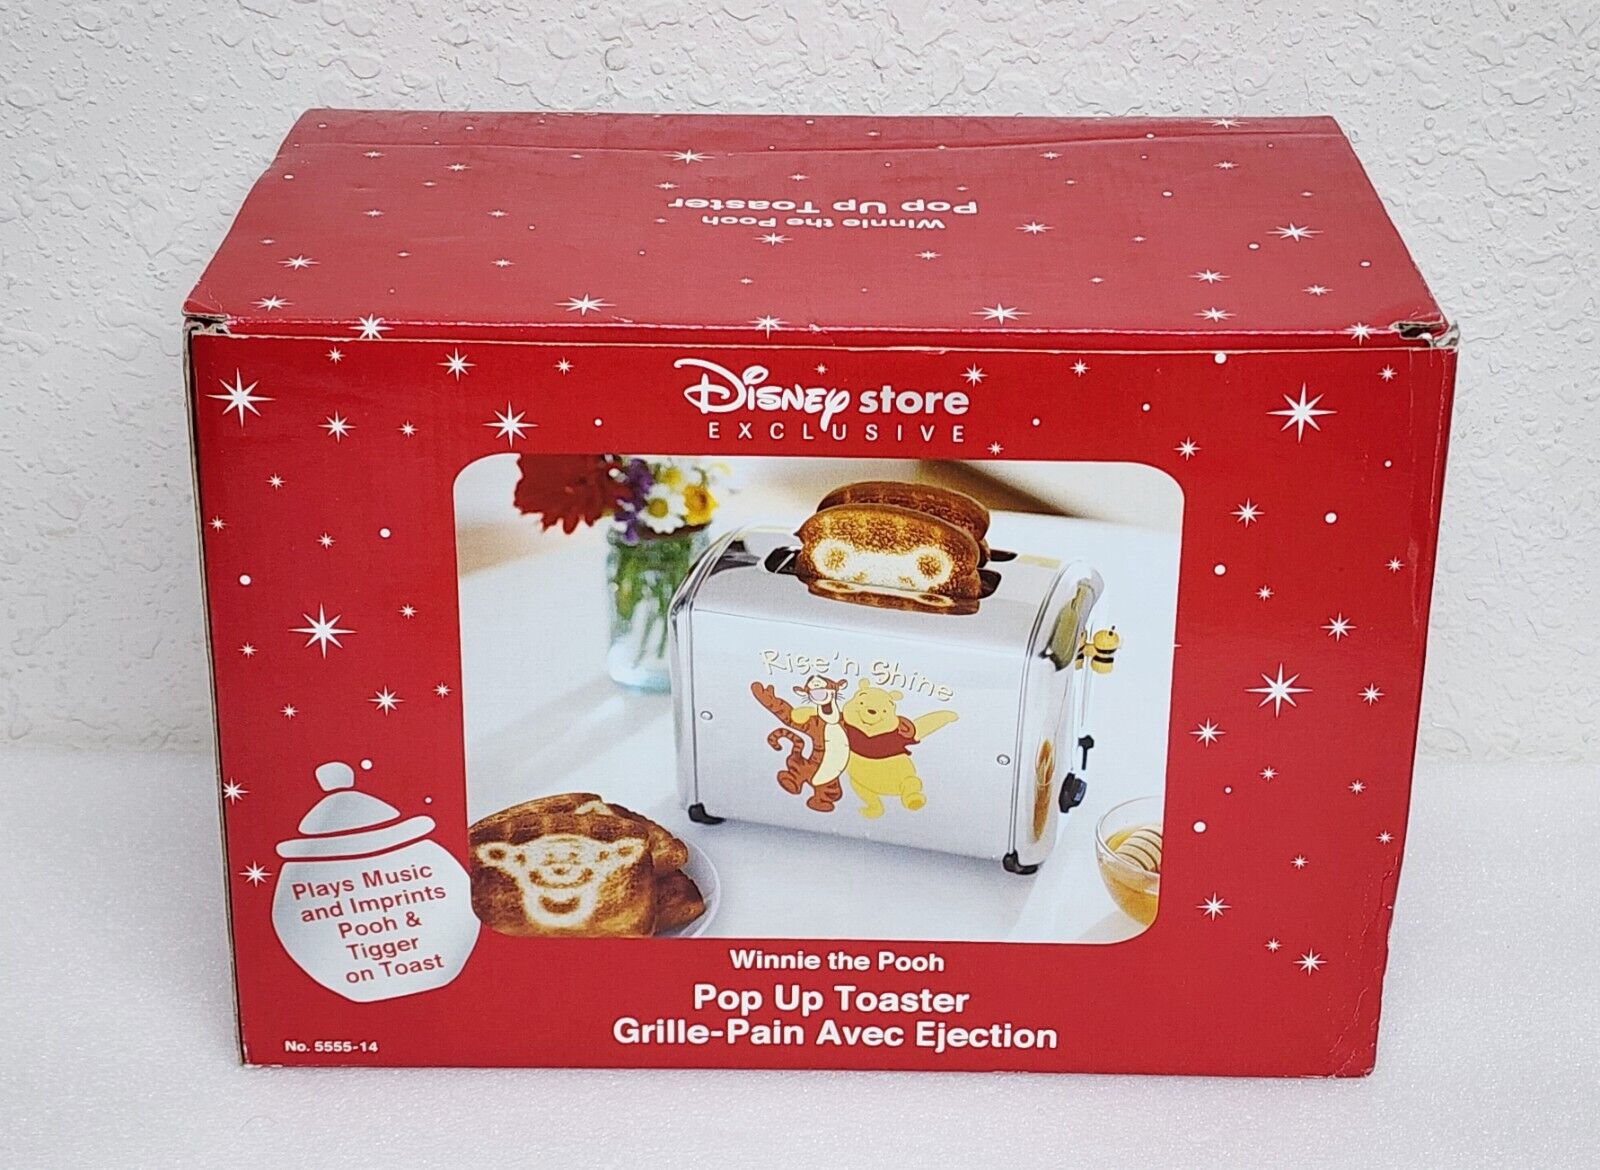 New Disney Store Winnie the Pooh Pop Up Toaster Rise N Shine Villaware 5555-14